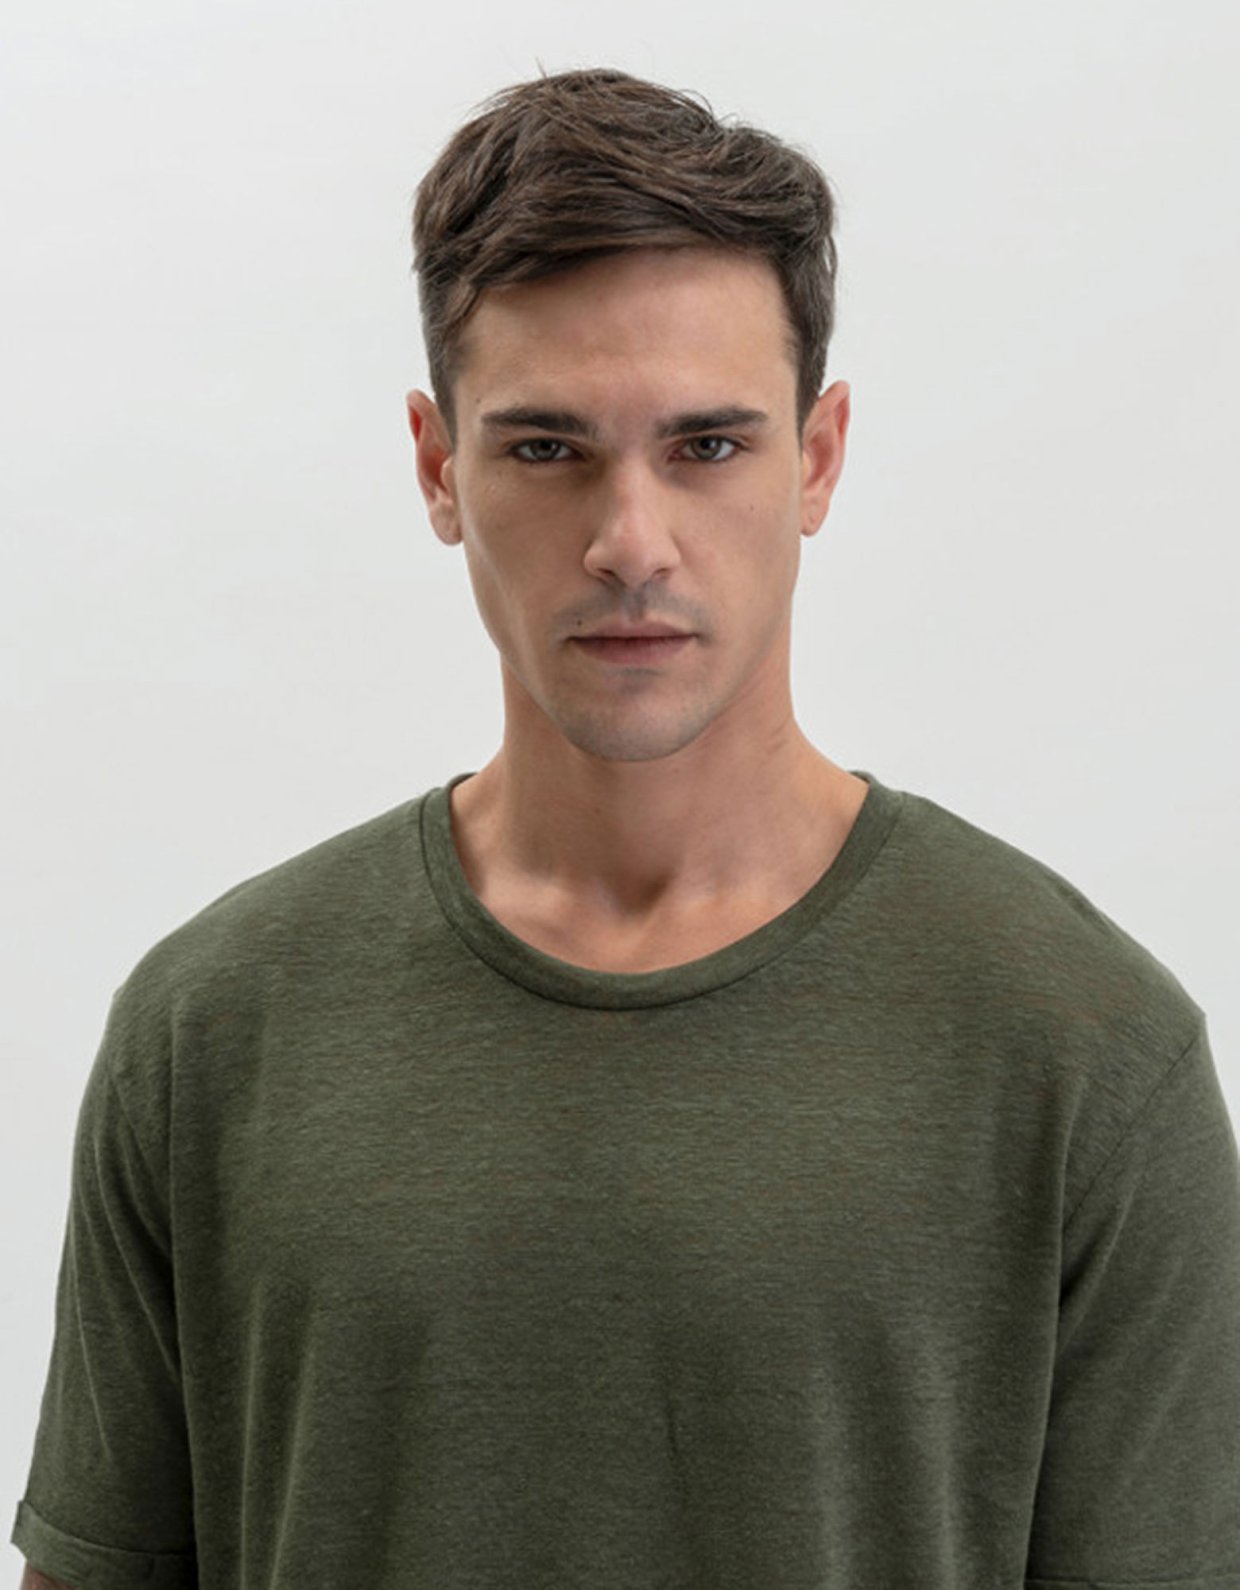 Gianni Lupo Linen t-shirt military green